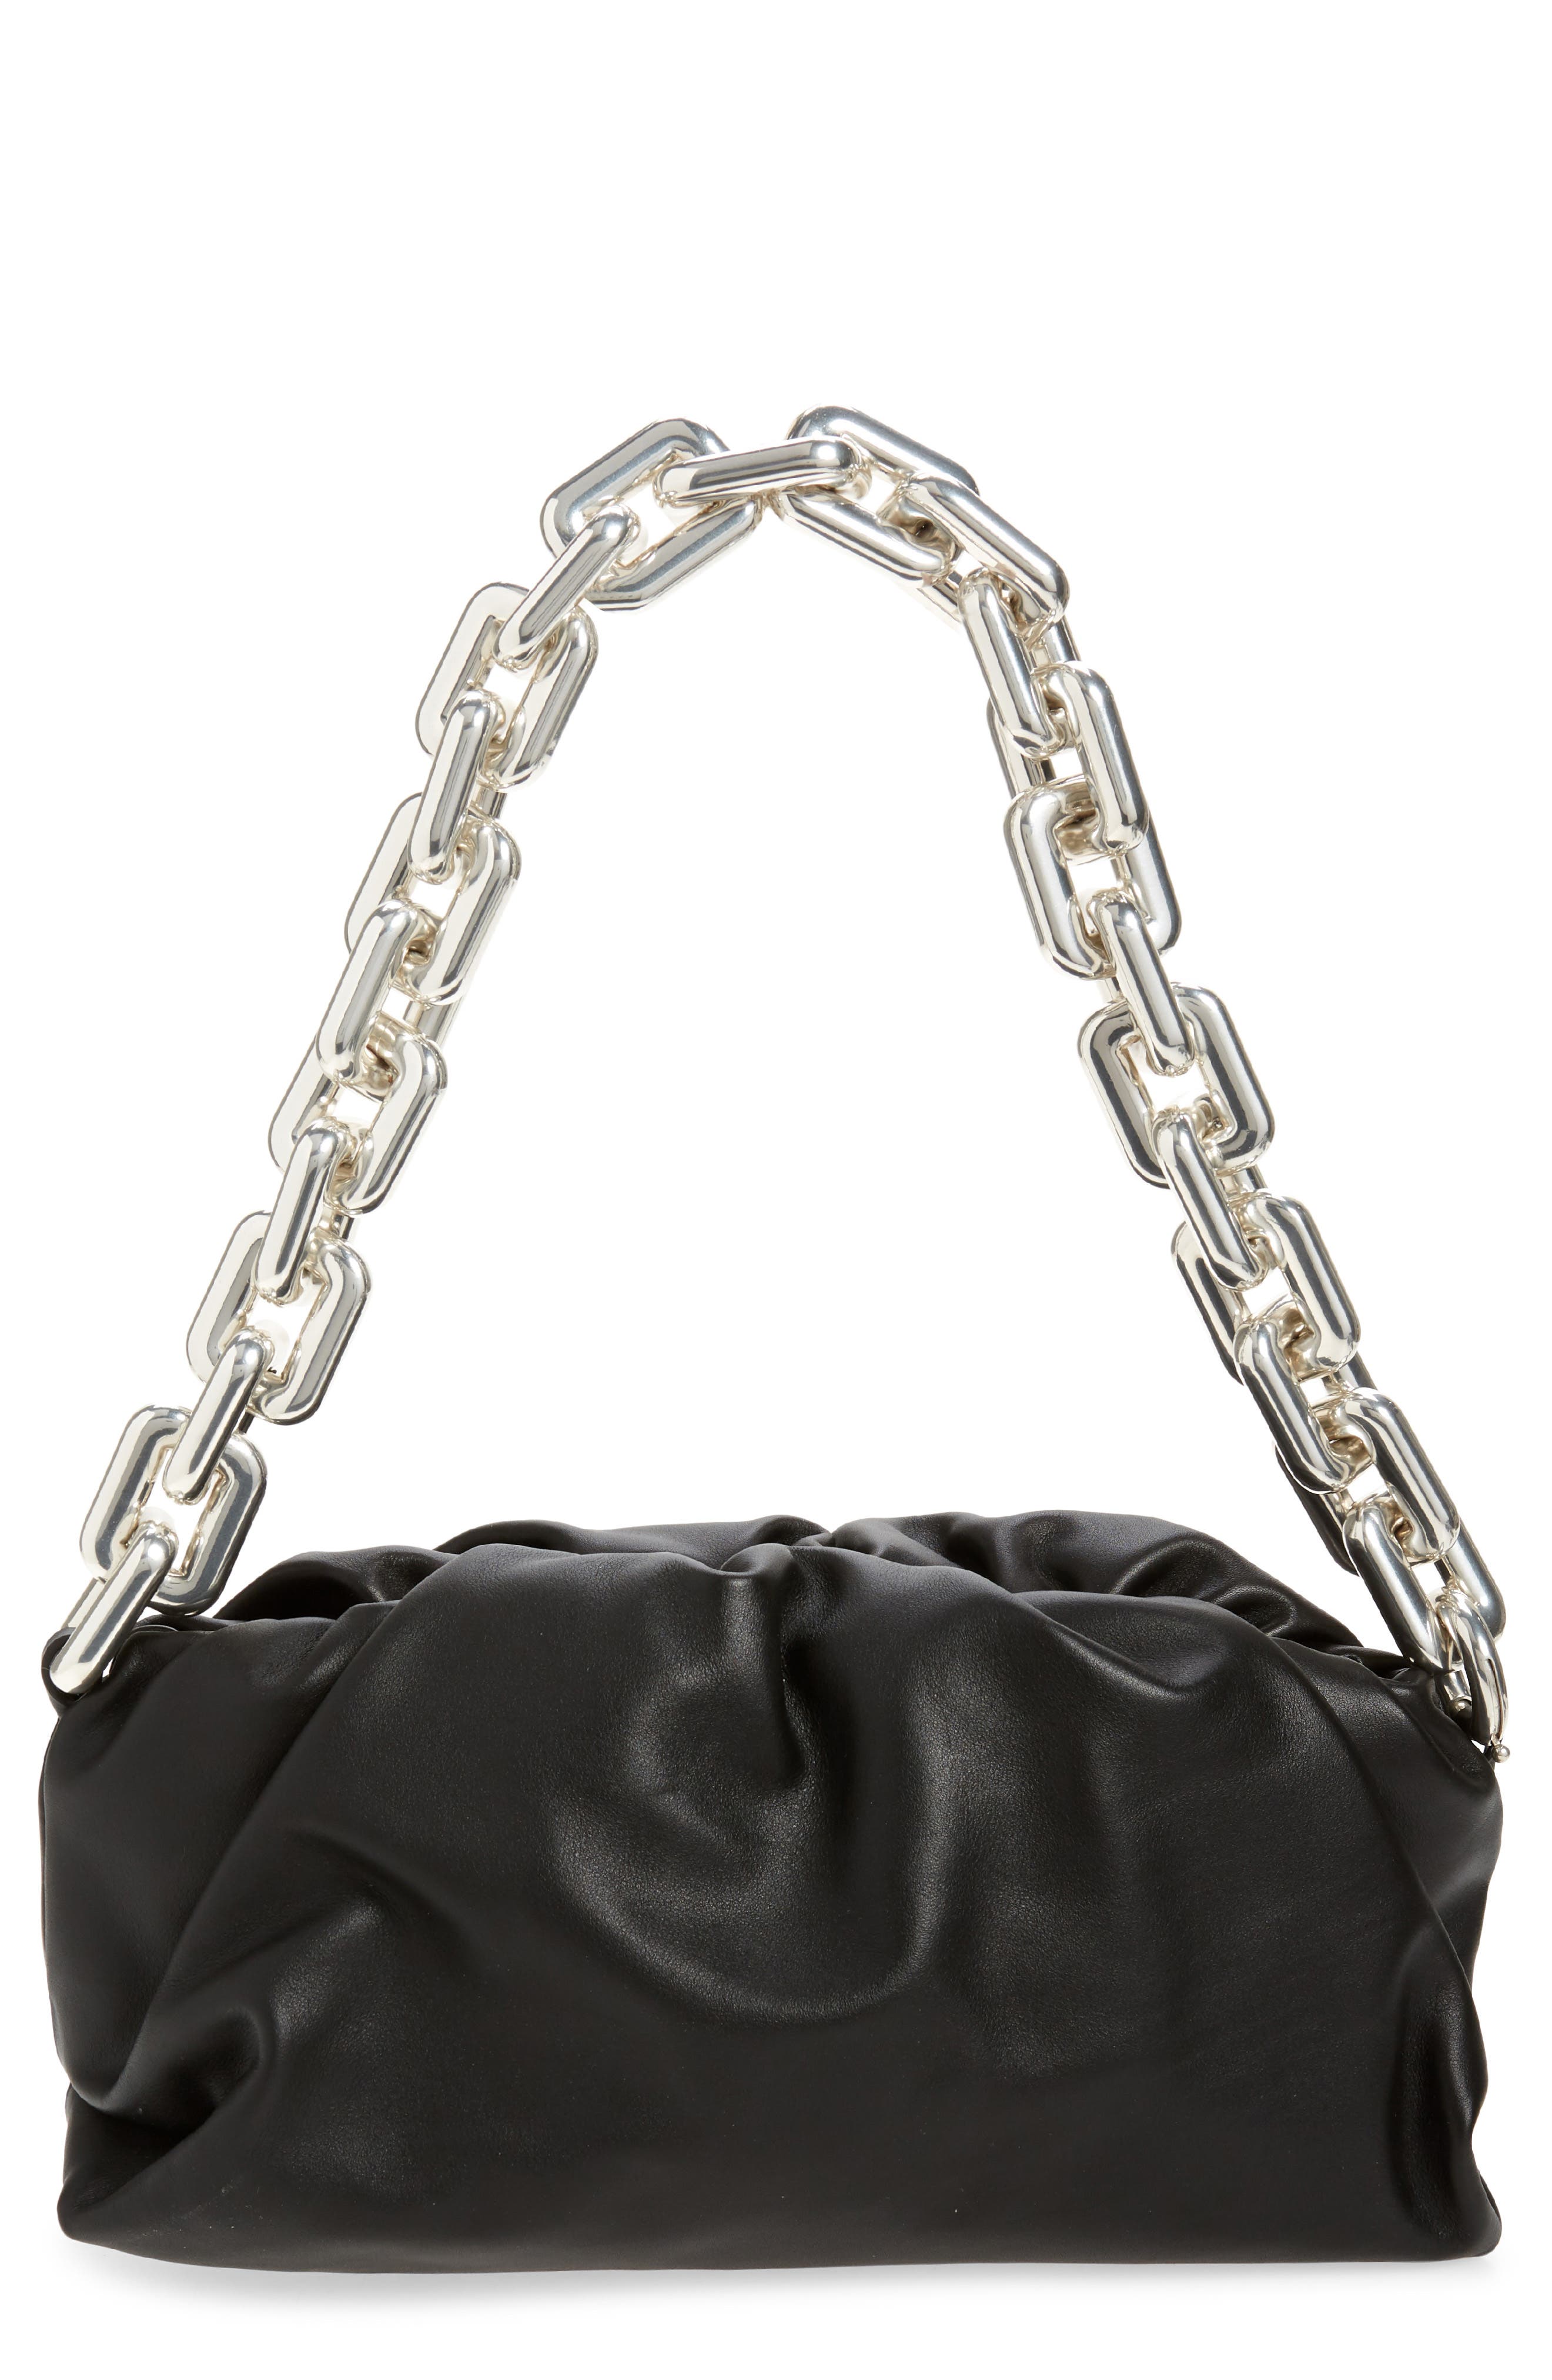 Bottega Veneta The Chain Pouch Leather Shoulder Bag in Nero/Silver